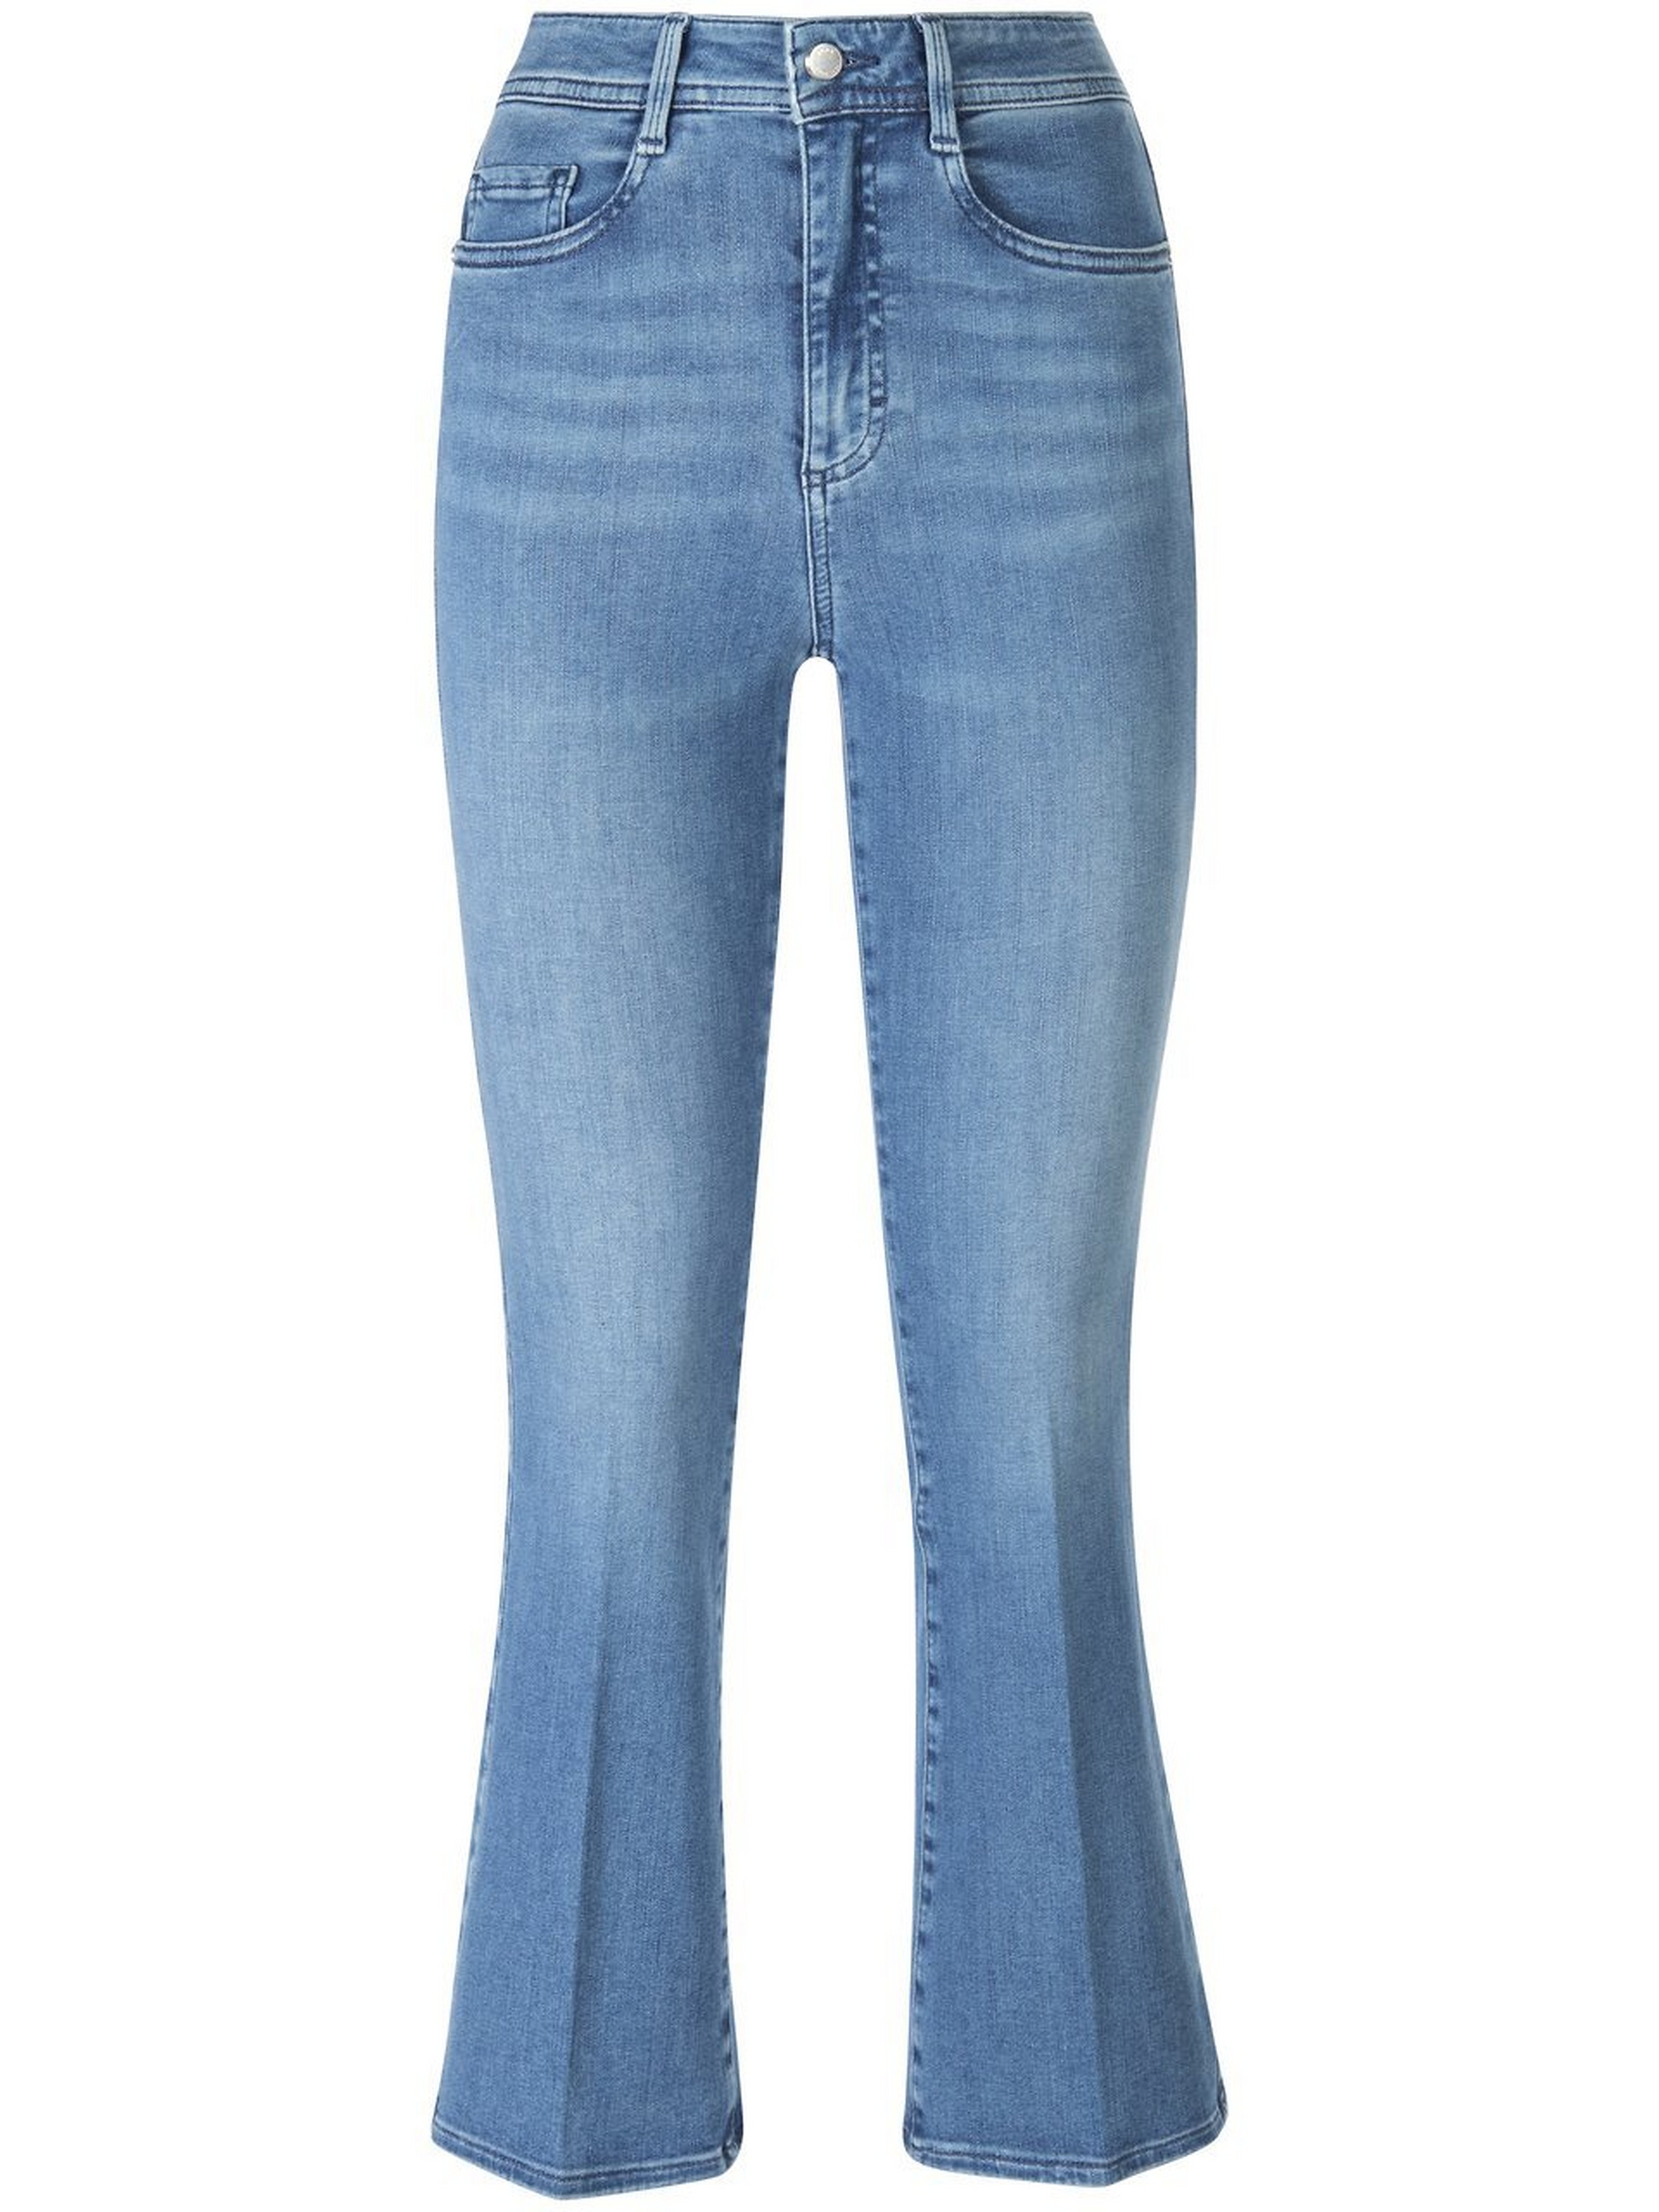 Jeans Van Brax Feel Good blauw